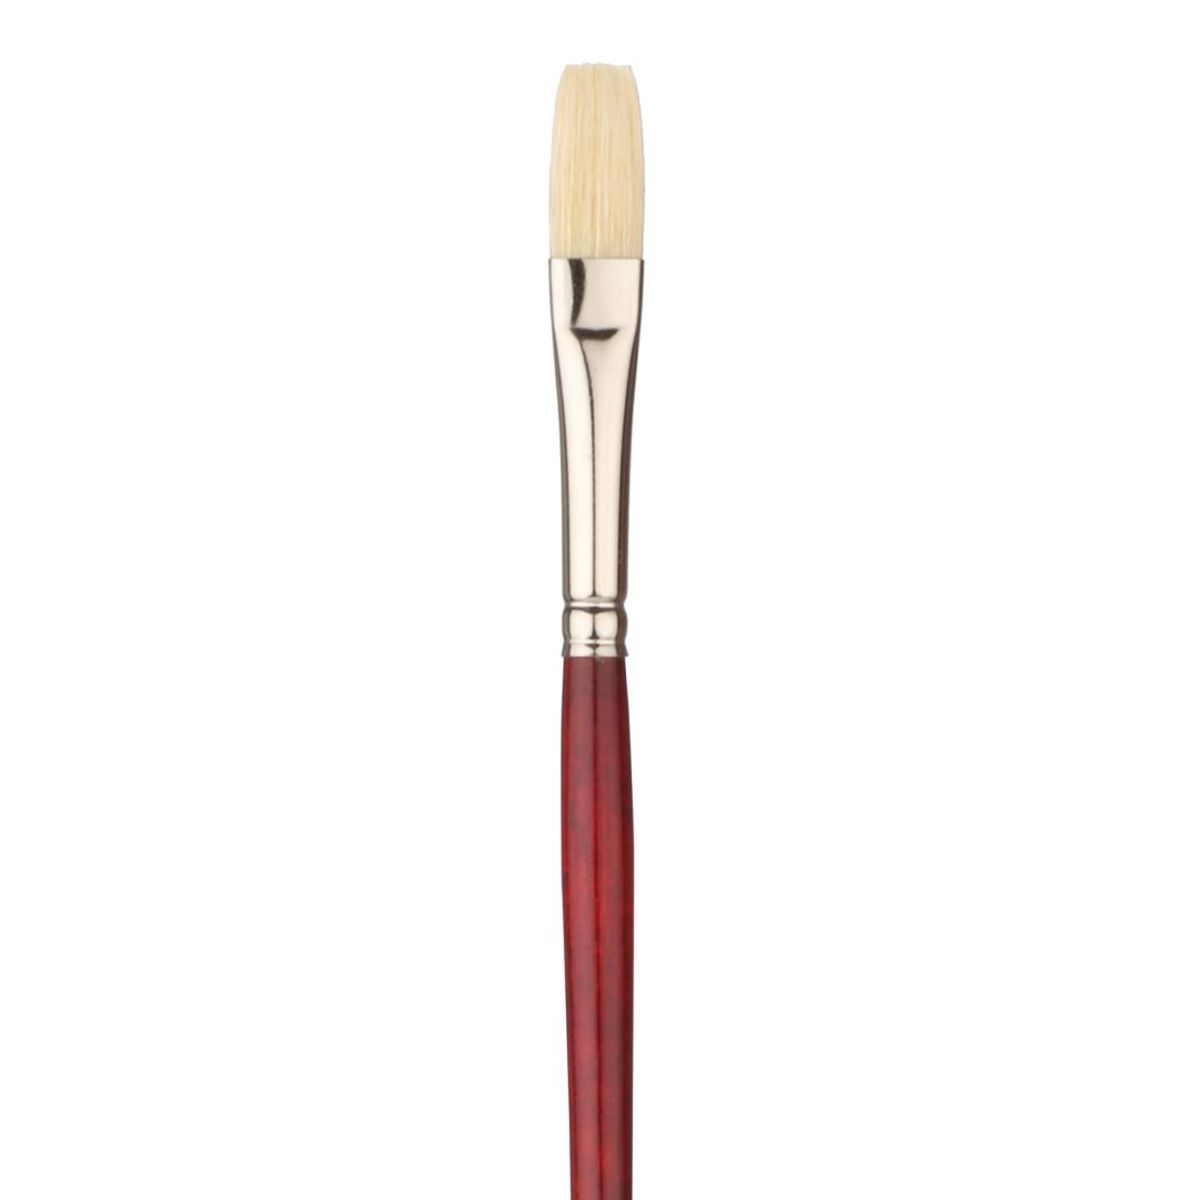 Art Essentials Supremo White Hog Bristle Brush - Series 140f - Flat - Long Handle - Size: 6